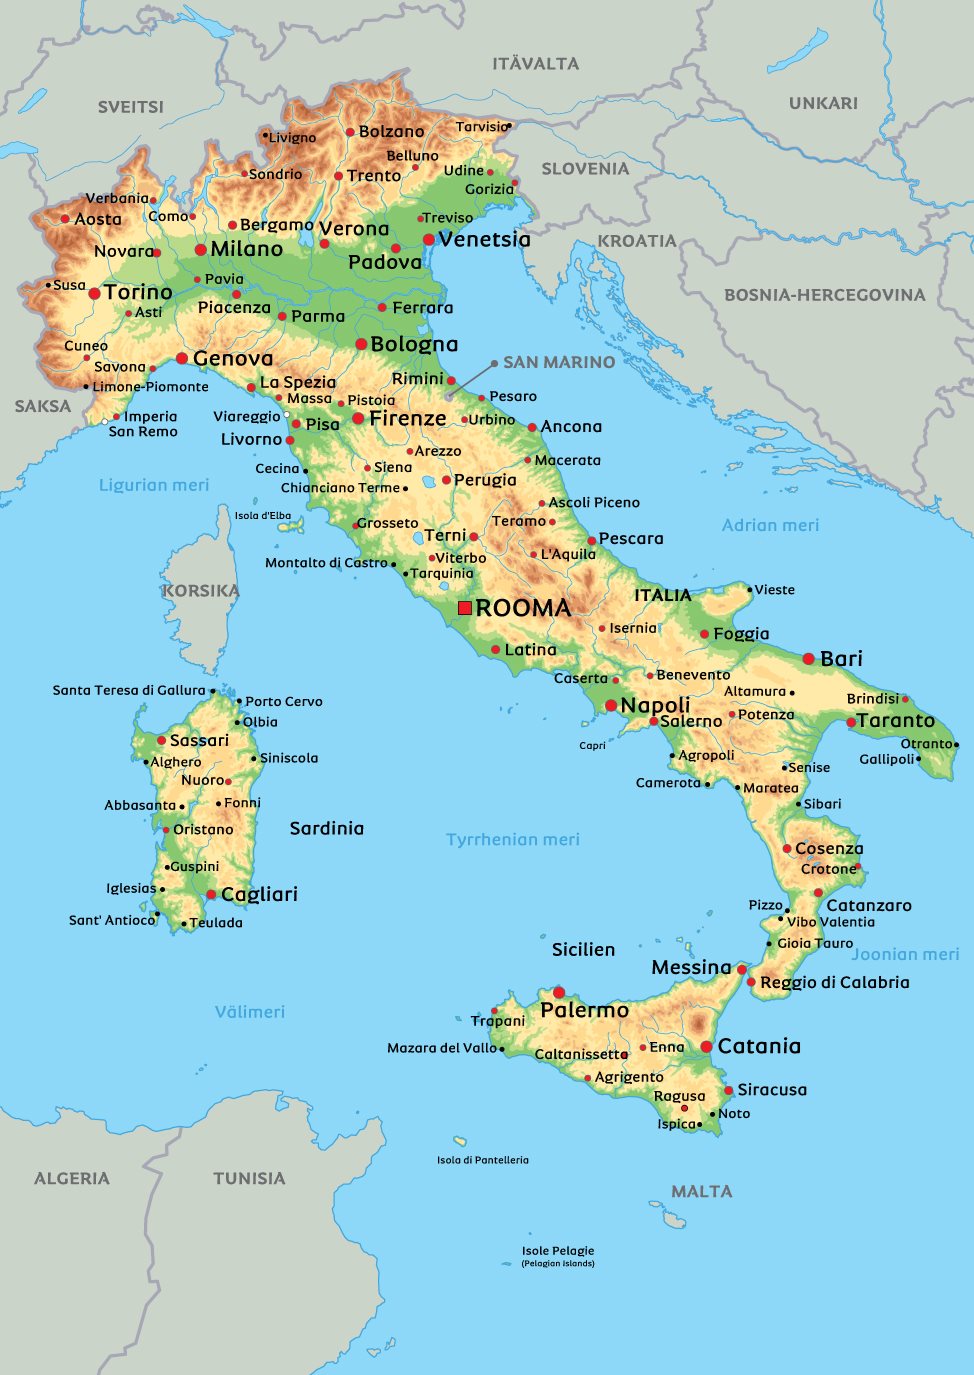 Kartta Italiasta: kts. esim. kaupunkien sijainti kartasta